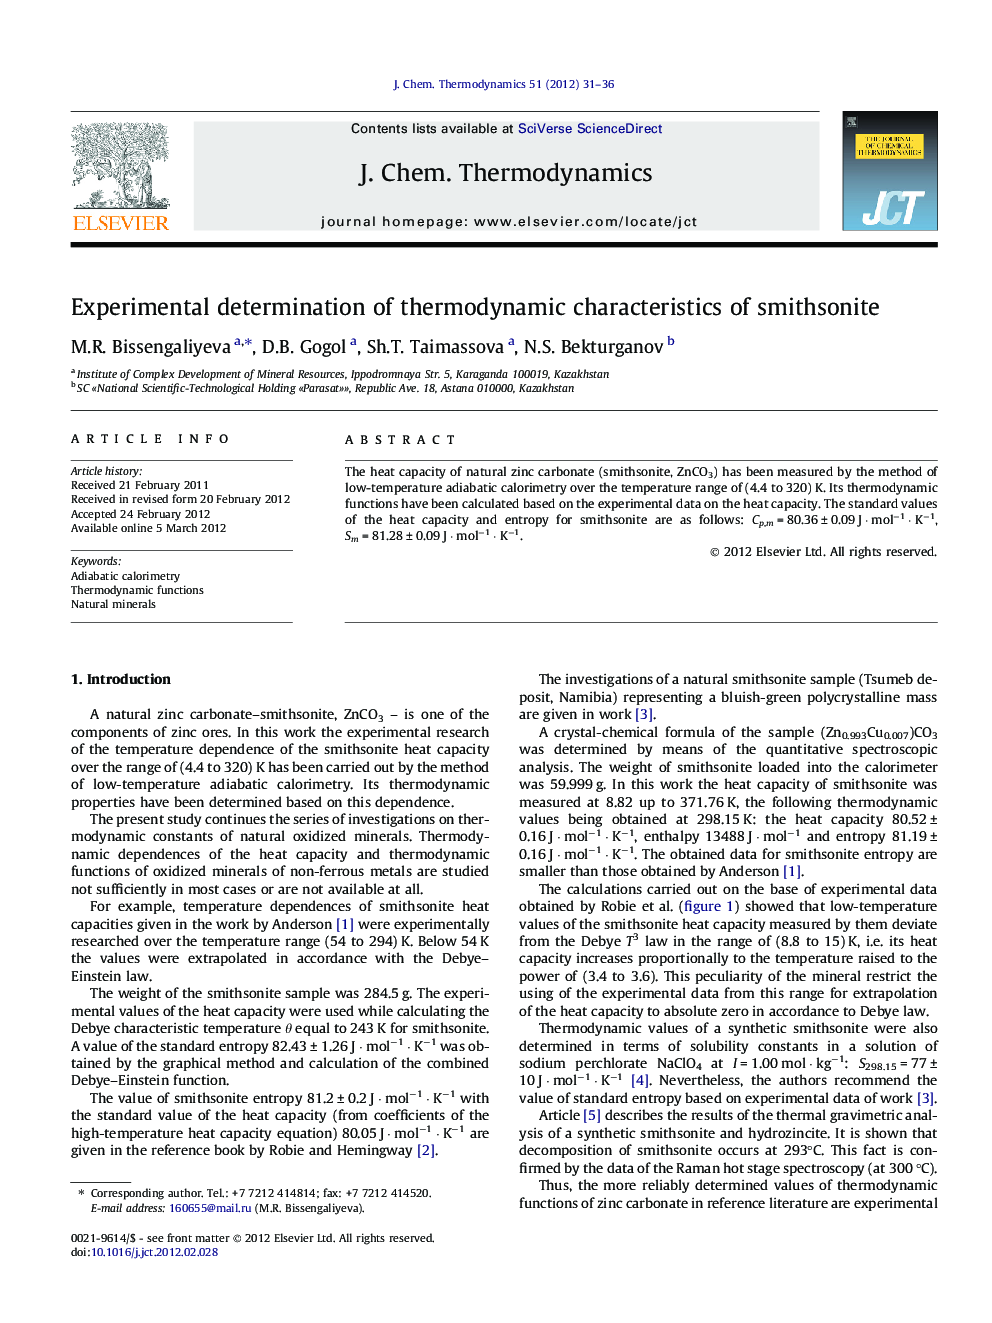 Experimental determination of thermodynamic characteristics of smithsonite